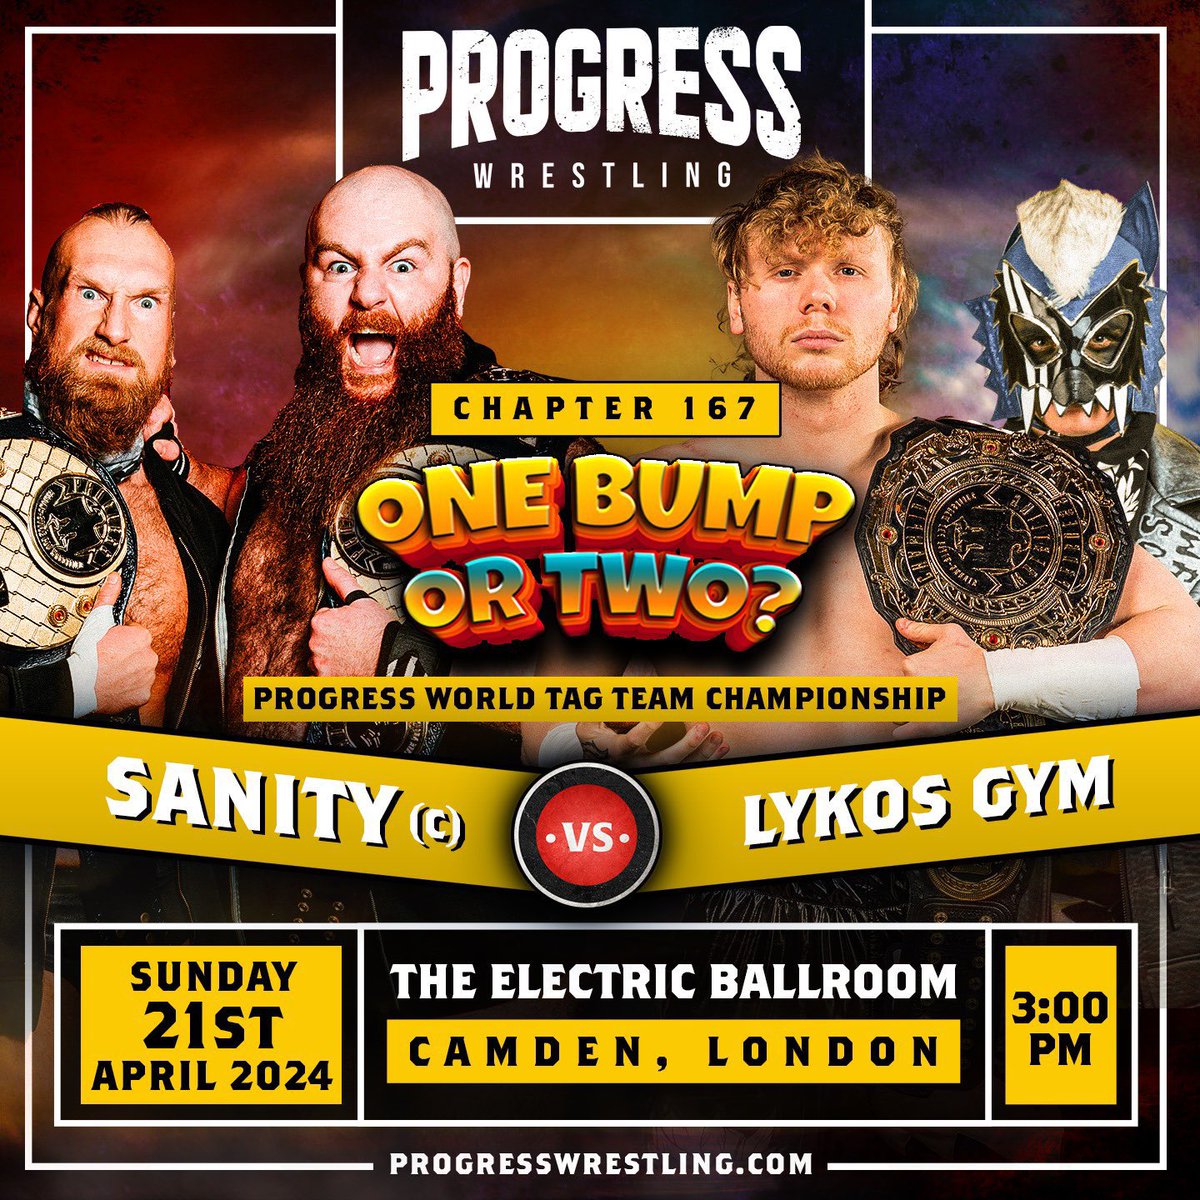 Tomorrow @ThisIs_Progress #Chapter167 at @EBallroomCamden in London Progress World Tag Team Championship @axeman3016 & @DamoMackle v @KidLykos & @KidLykosII